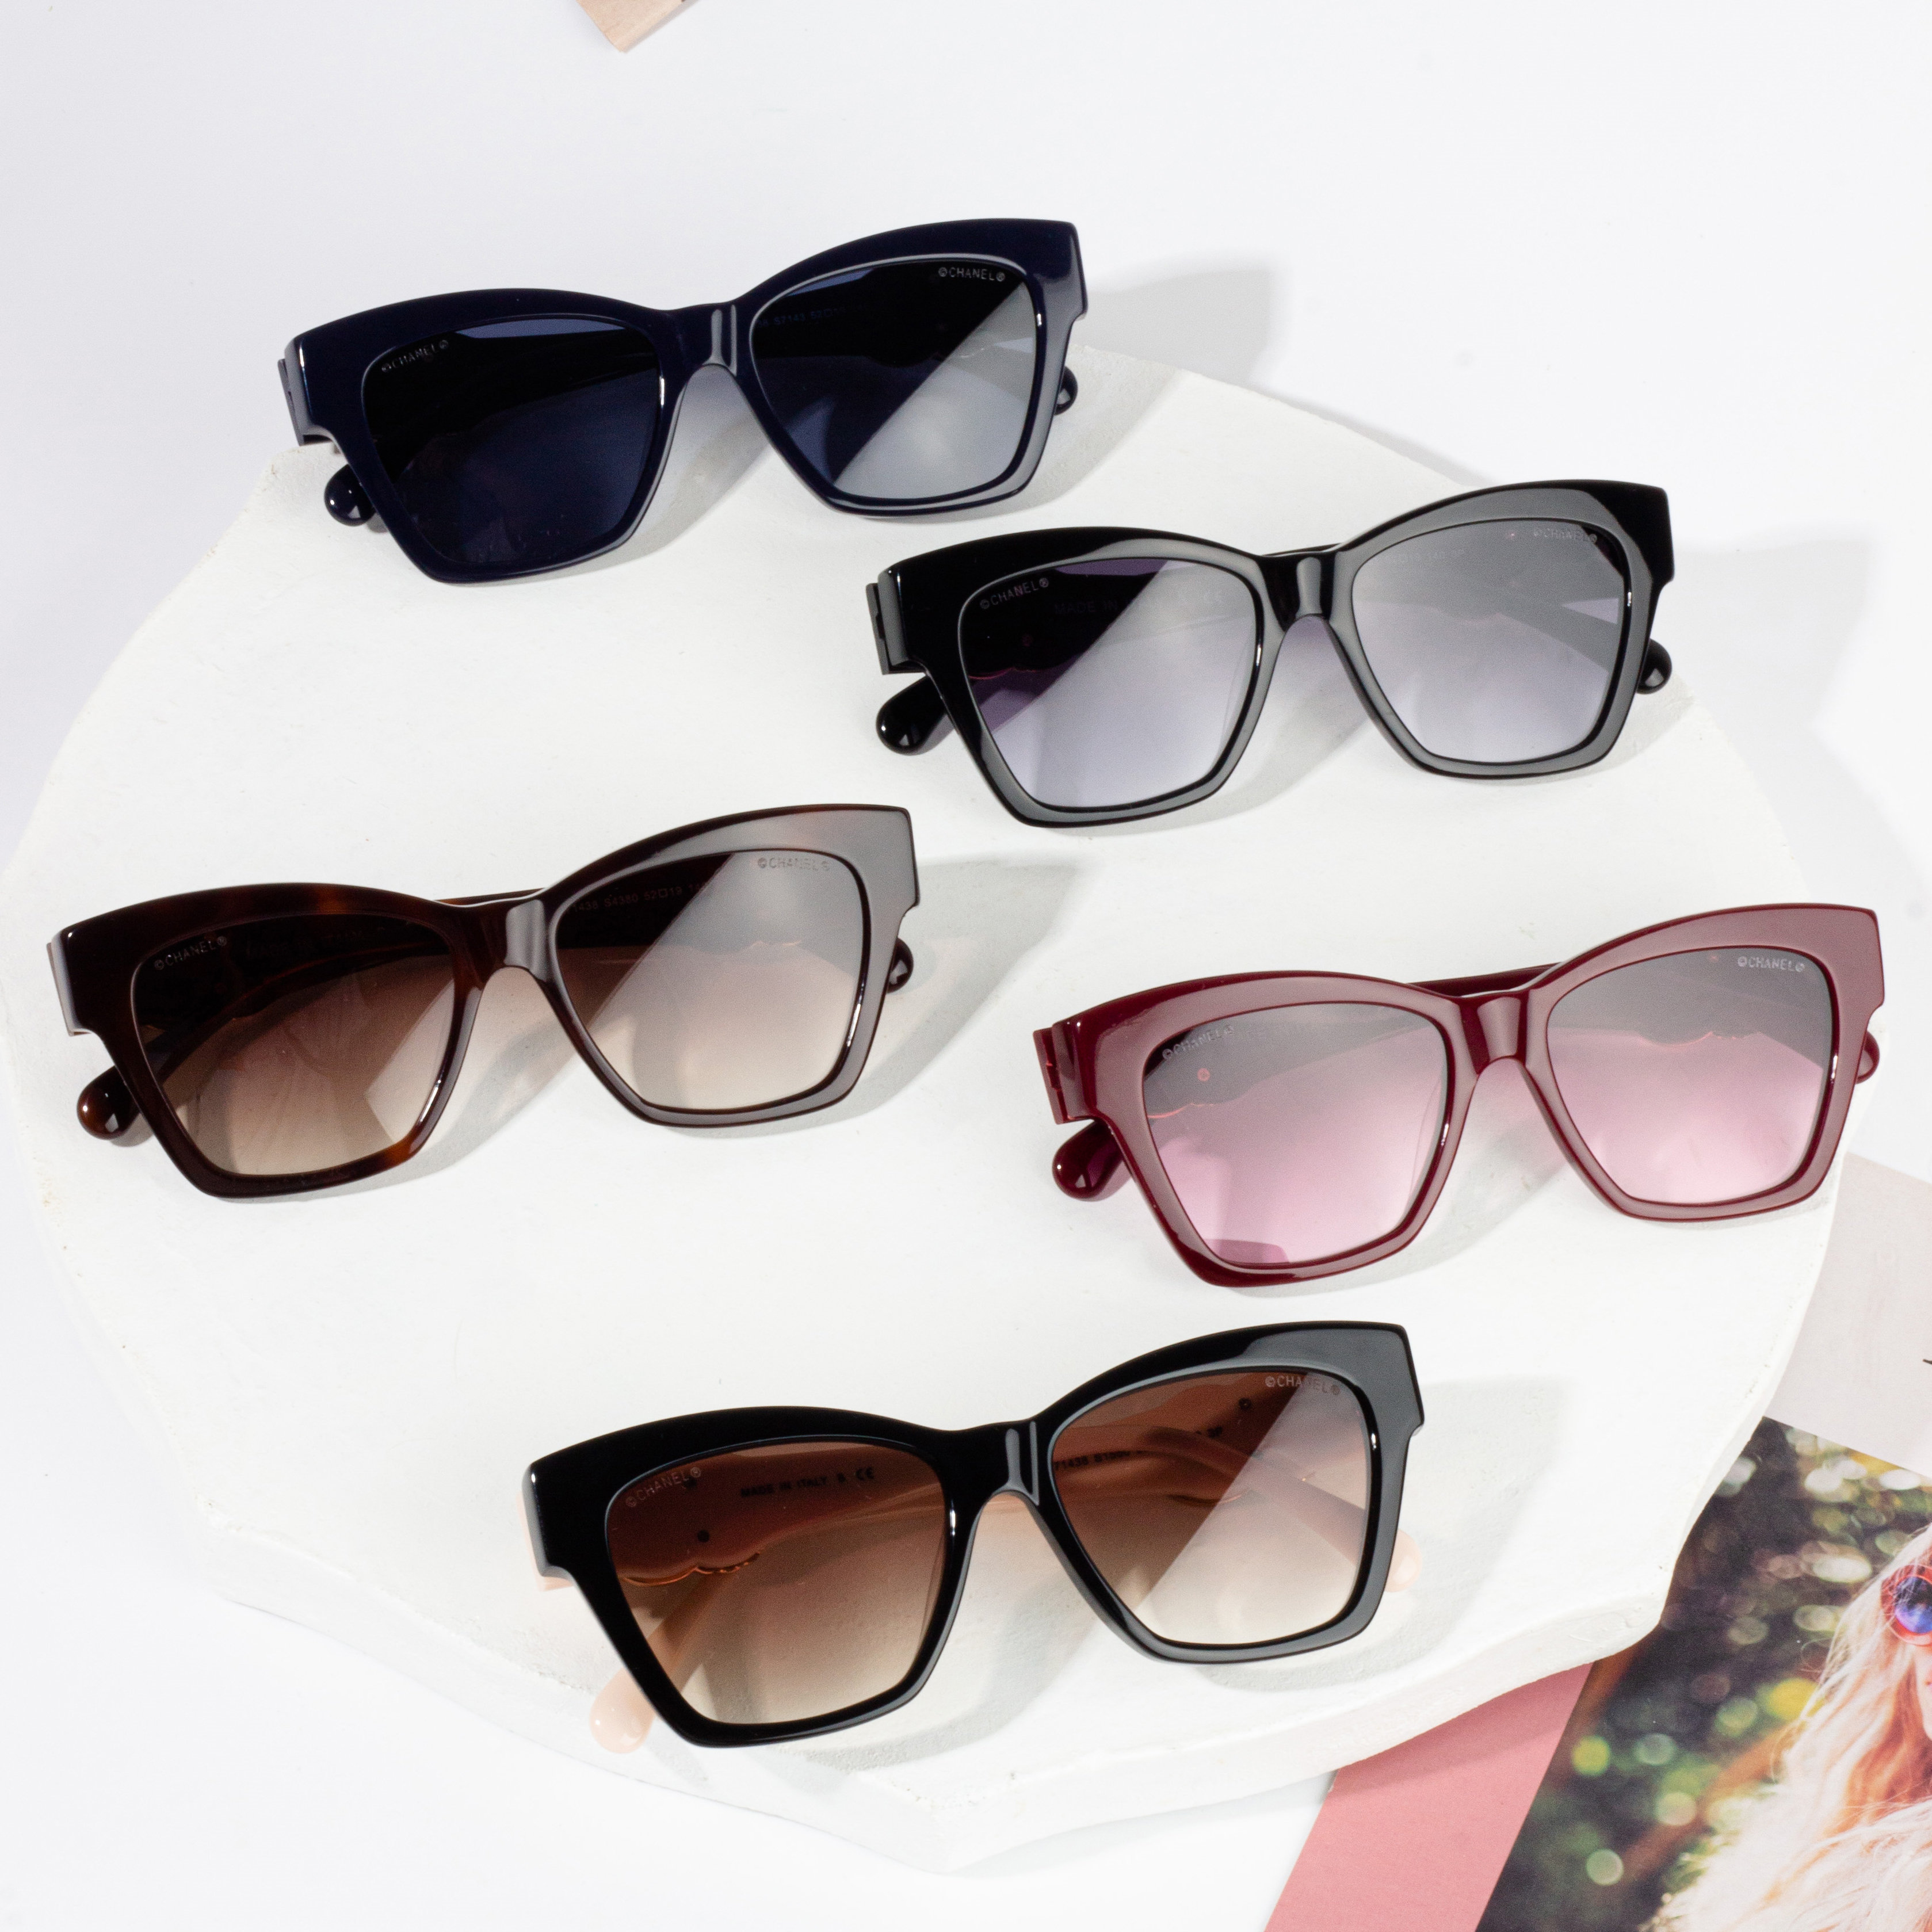 Lowest Price for Foster Grant Kids Sunglasses - wholesale price vintage sunglass brand design – HJ EYEWEAR